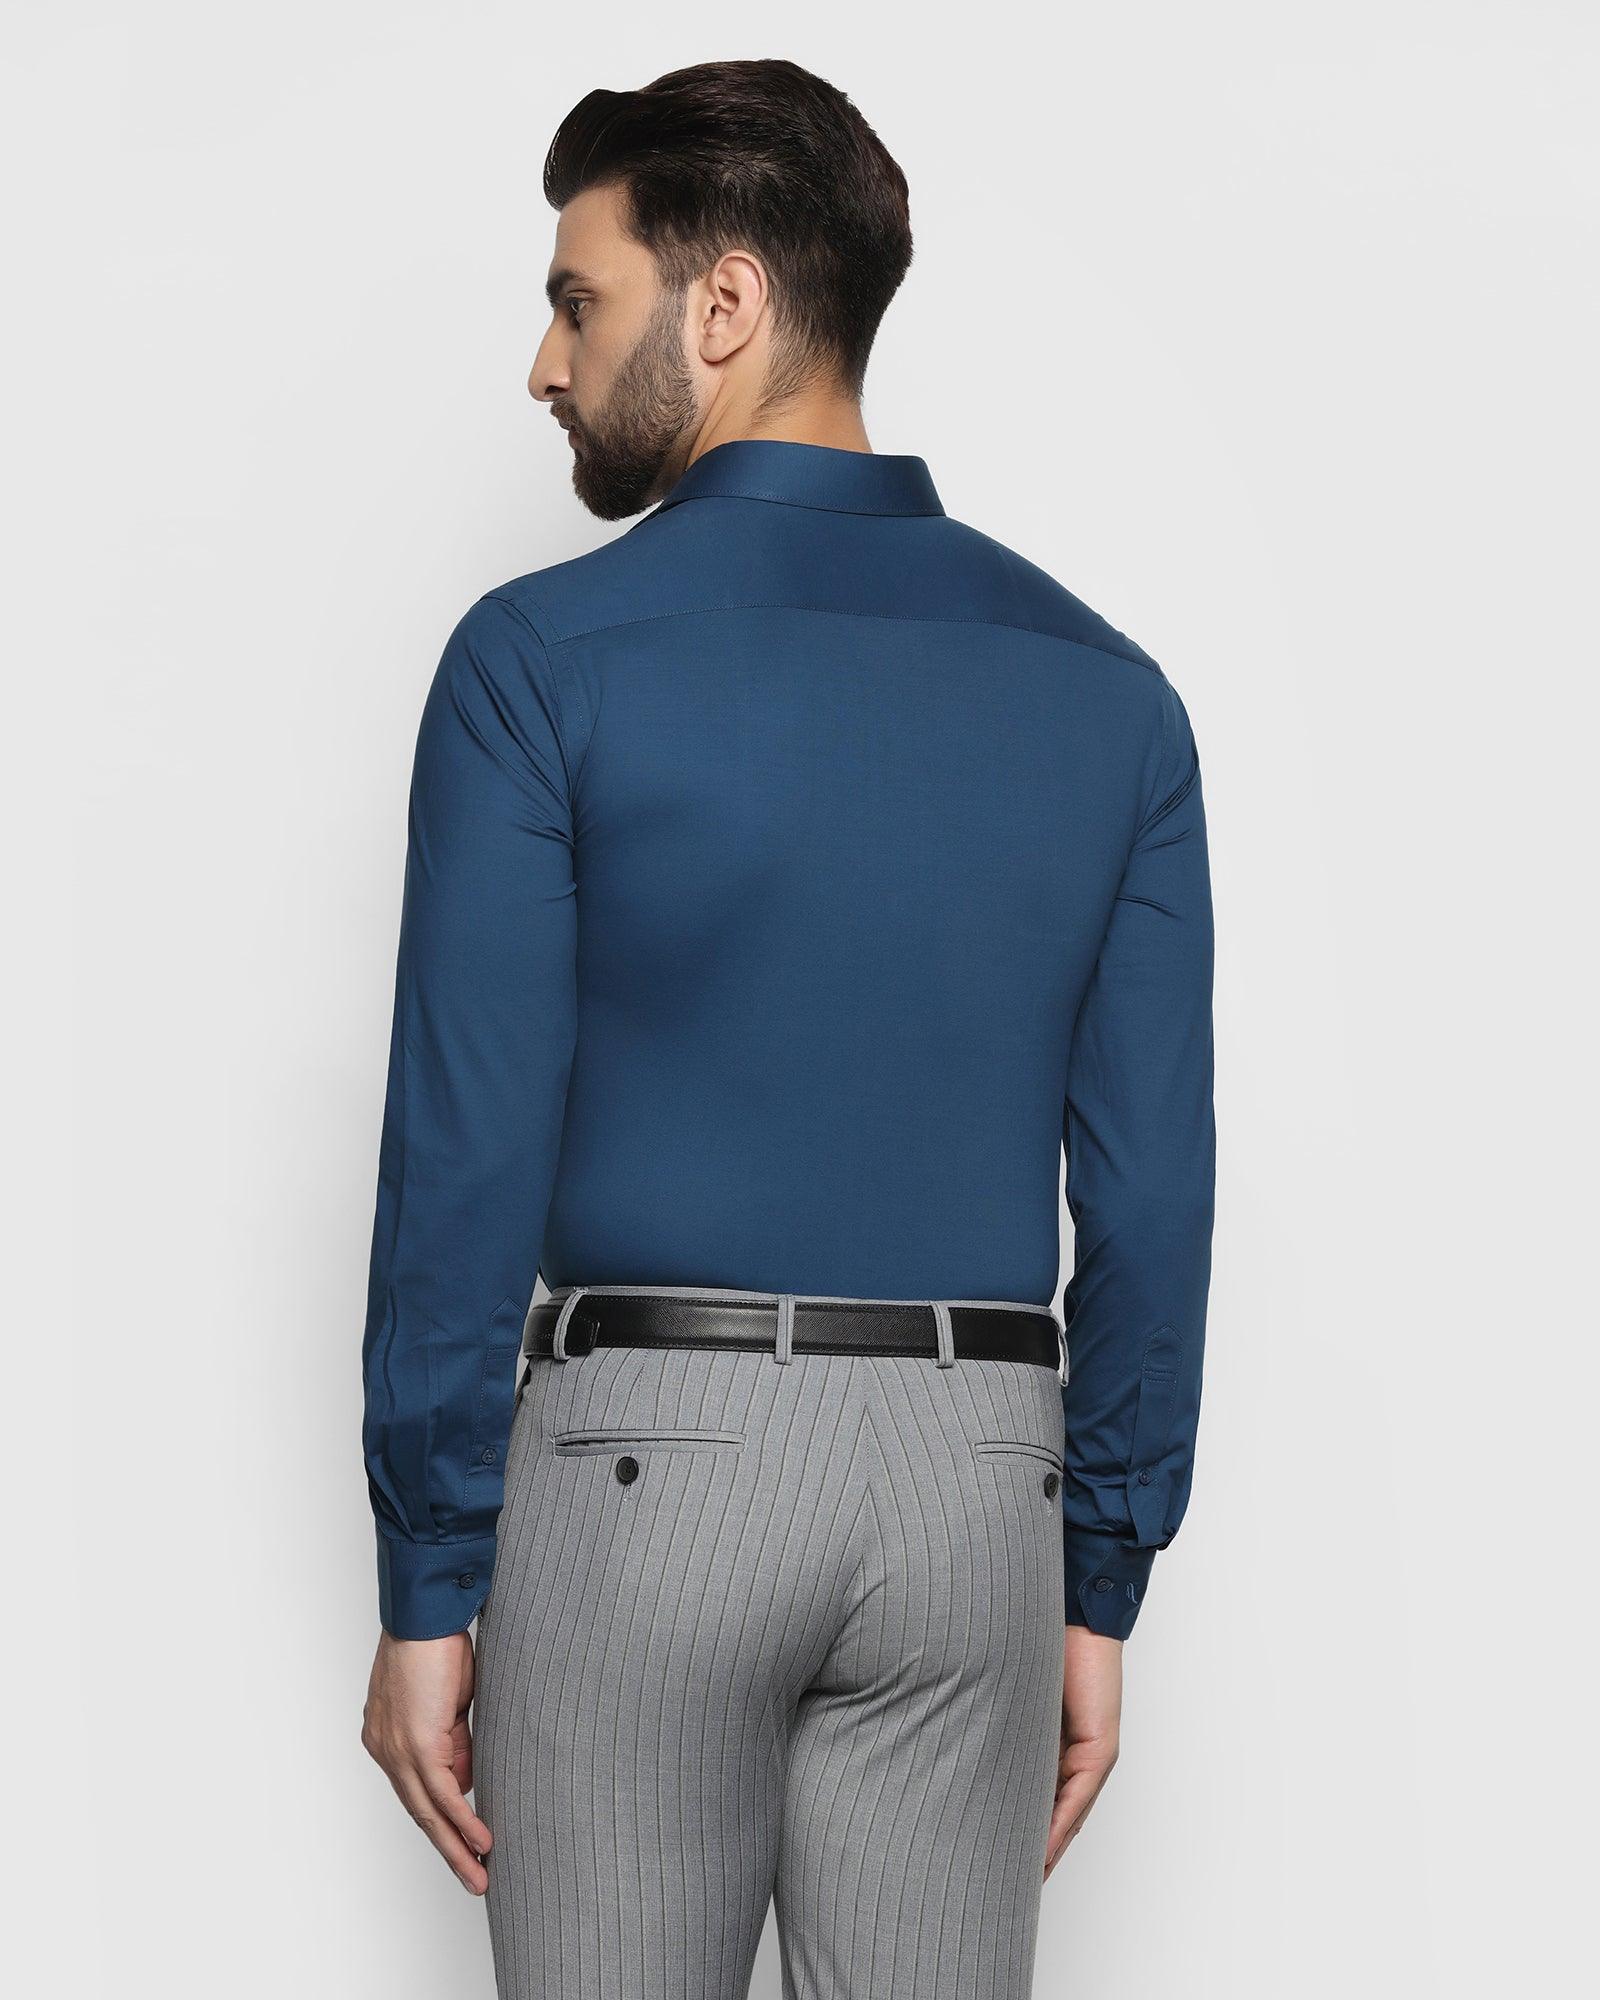 Formal Blue Solid Shirt - Jean